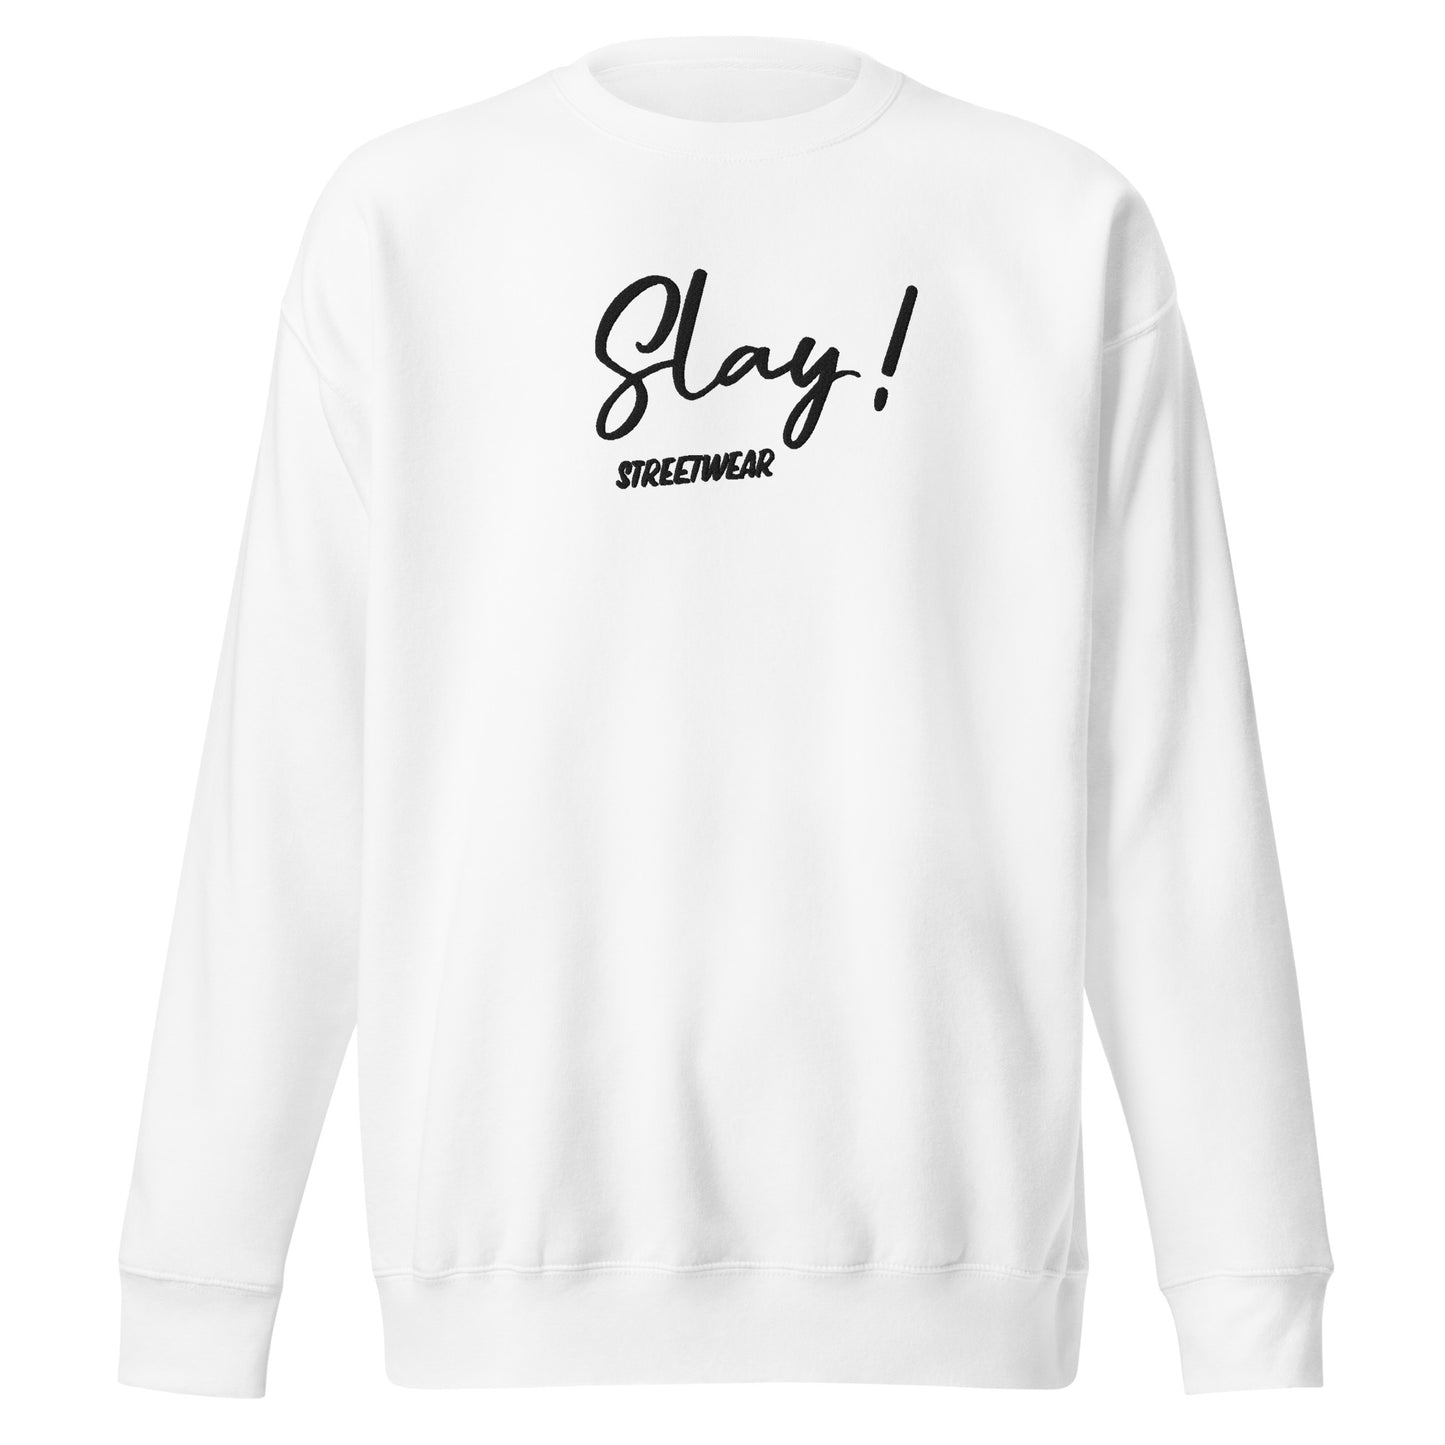 "Slay" men's hooded sweatshirt